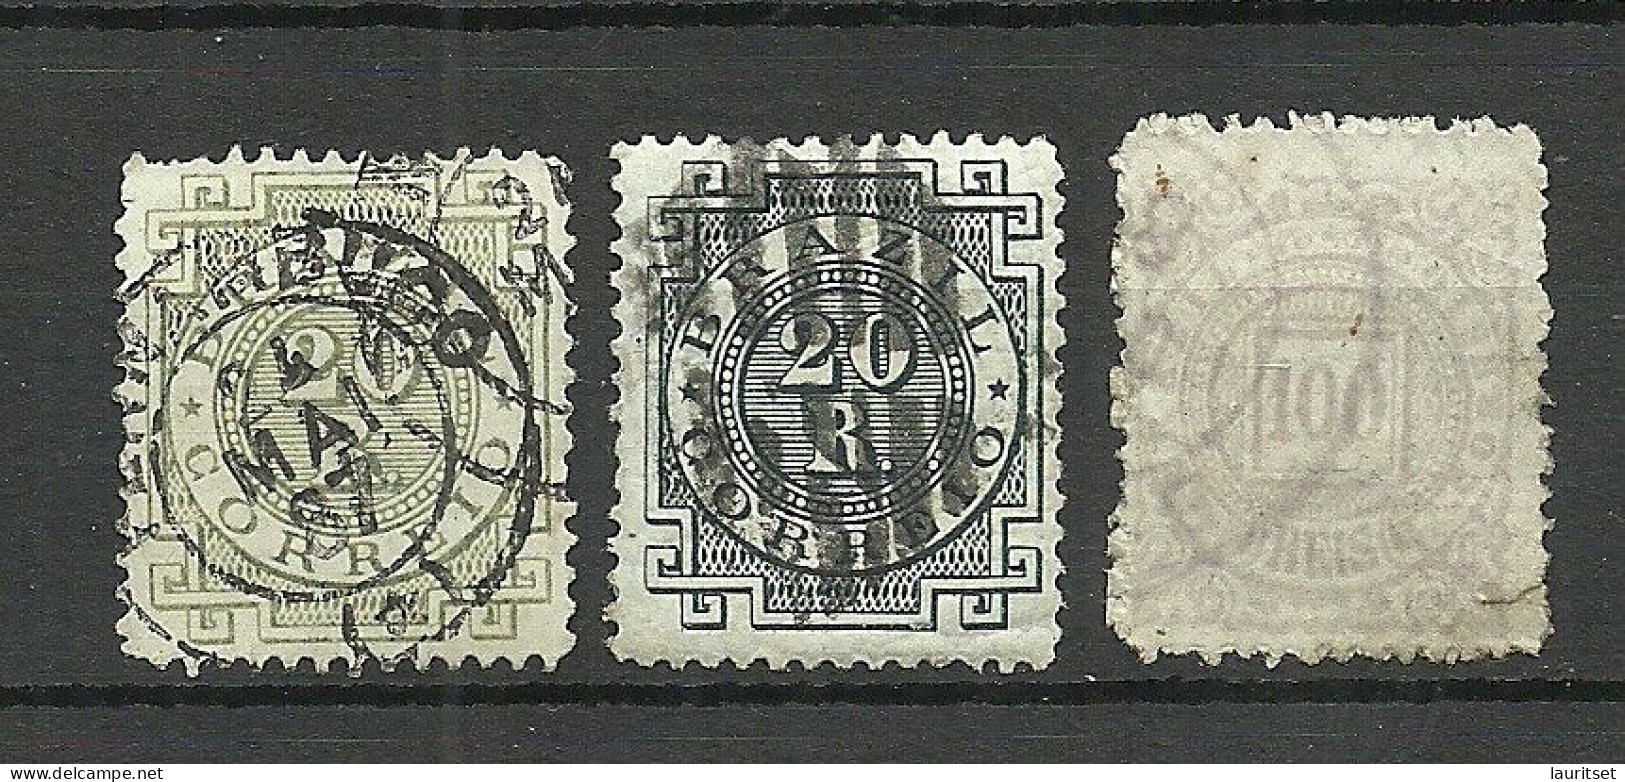 BRAZIL Brazilia O 1884/1885 Michel 59 - 61 O - Used Stamps